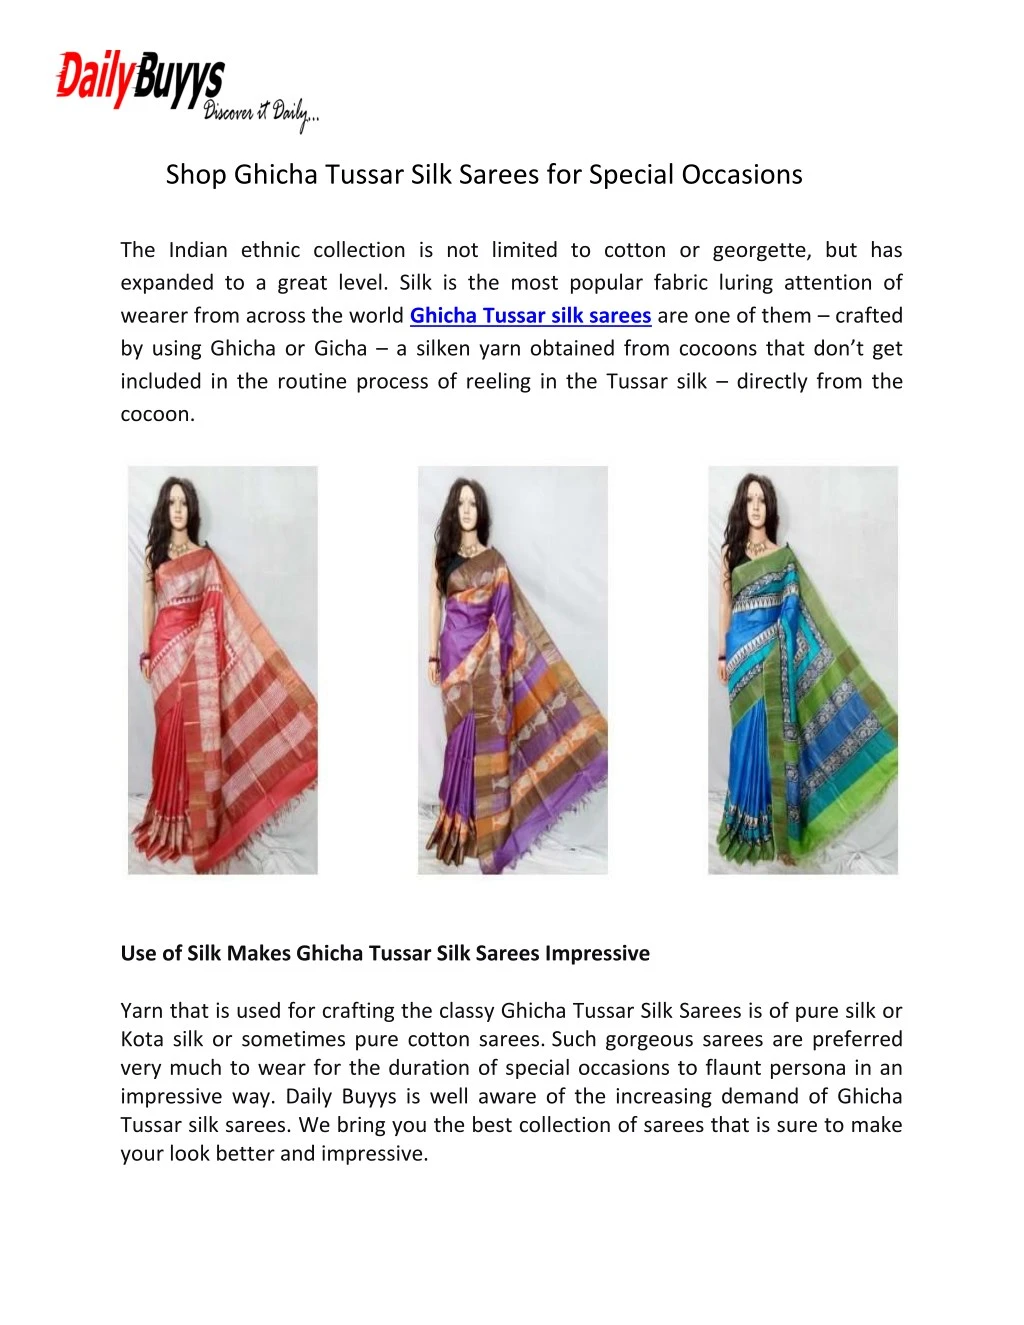 shop ghicha tussar silk sarees for special